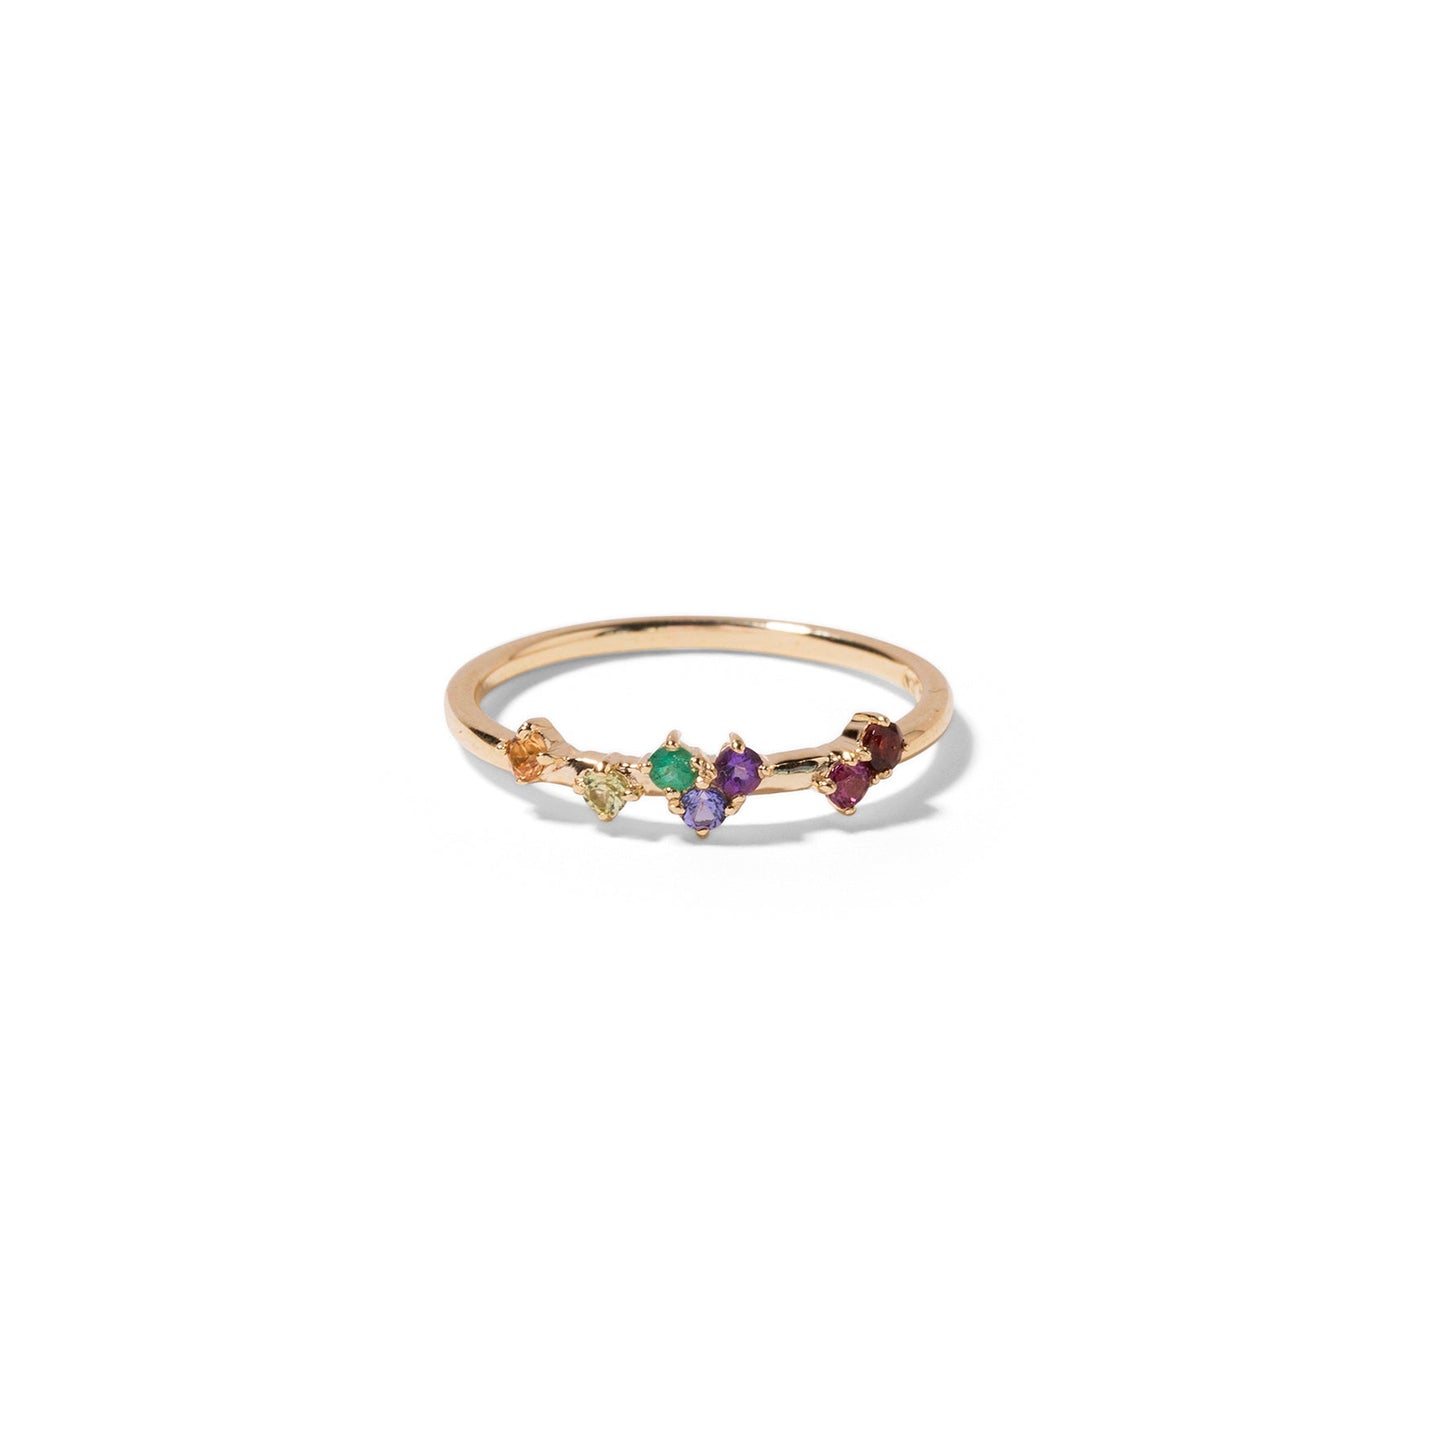 9ct gold ring with colourful gemstones peridot, amethyst, citrine, tanzanite, garnet, emerald